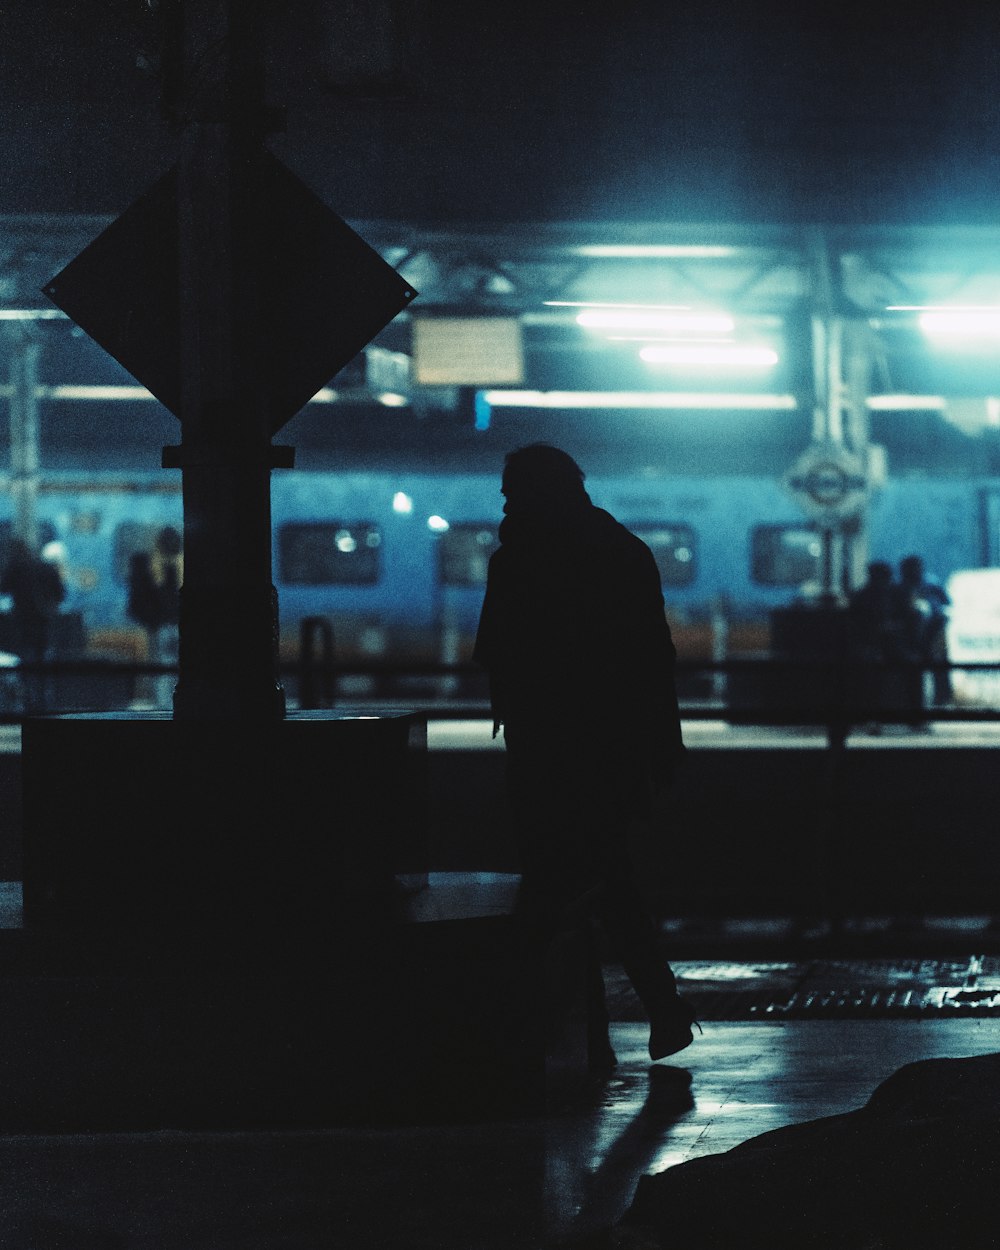 a man standing on a train platform at night